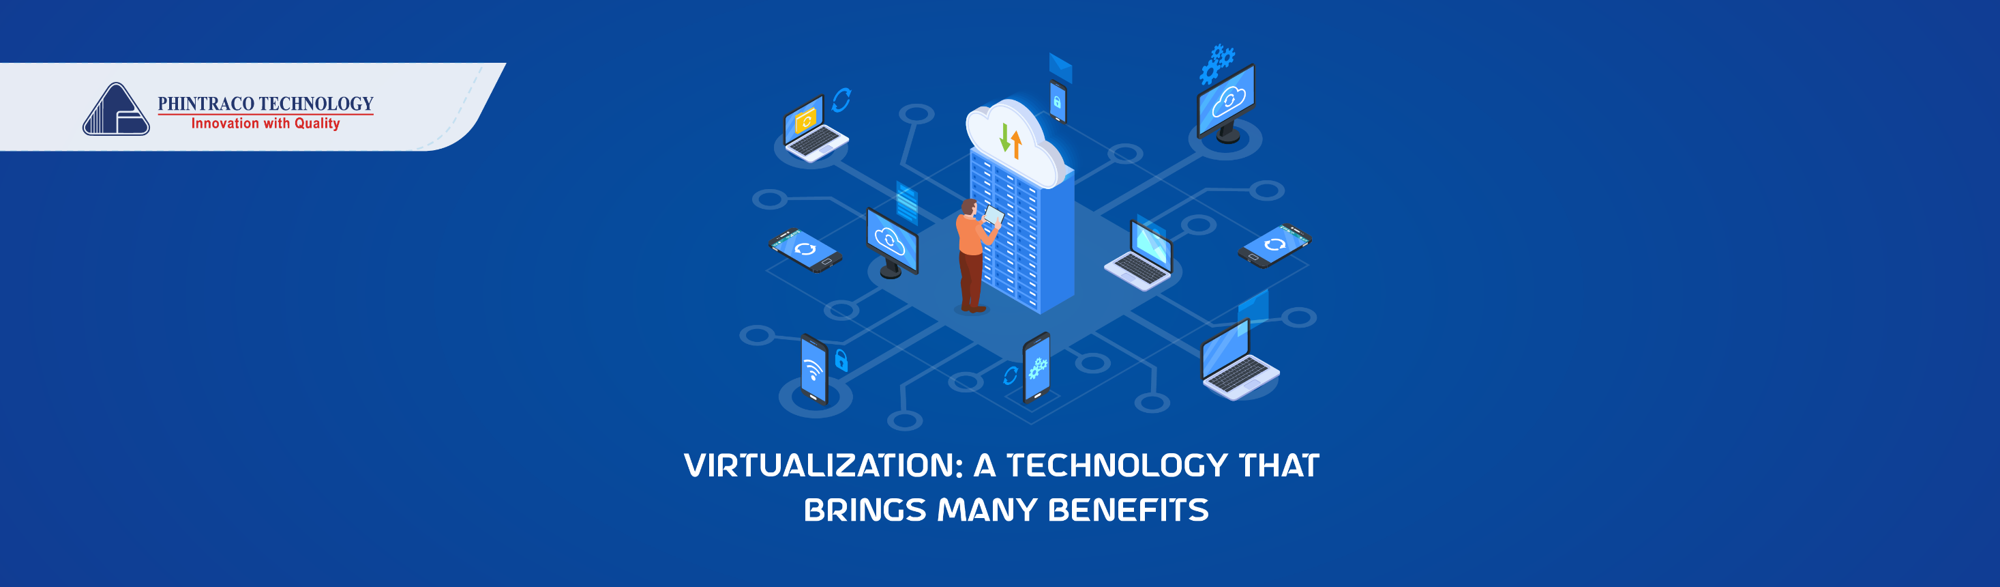 Virtualization: A Technology that Brings Many Benefits